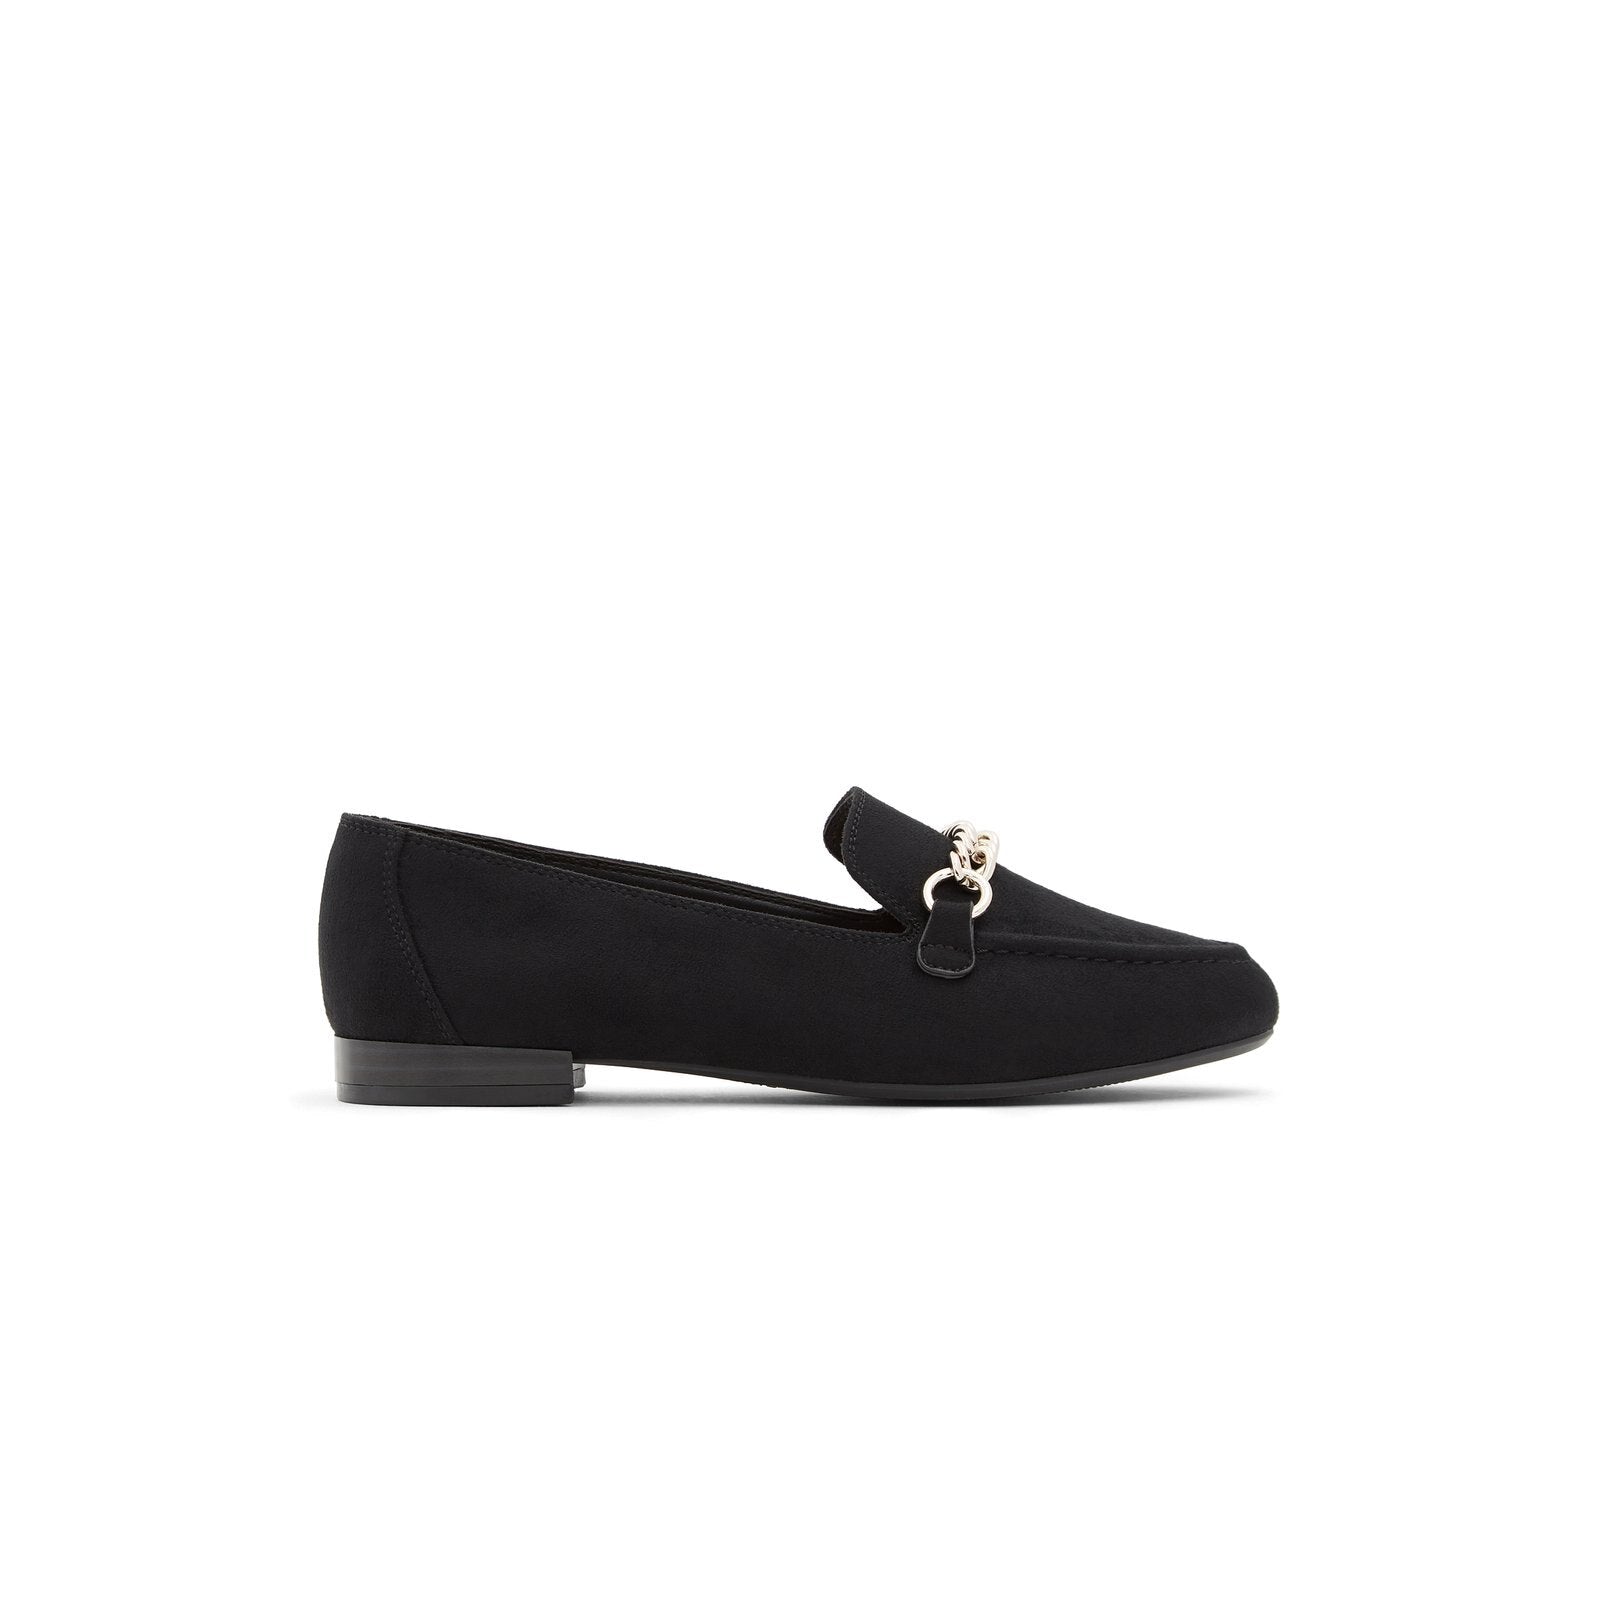 Norah / Loafers Women Shoes - Black - CALL IT SPRING KSA